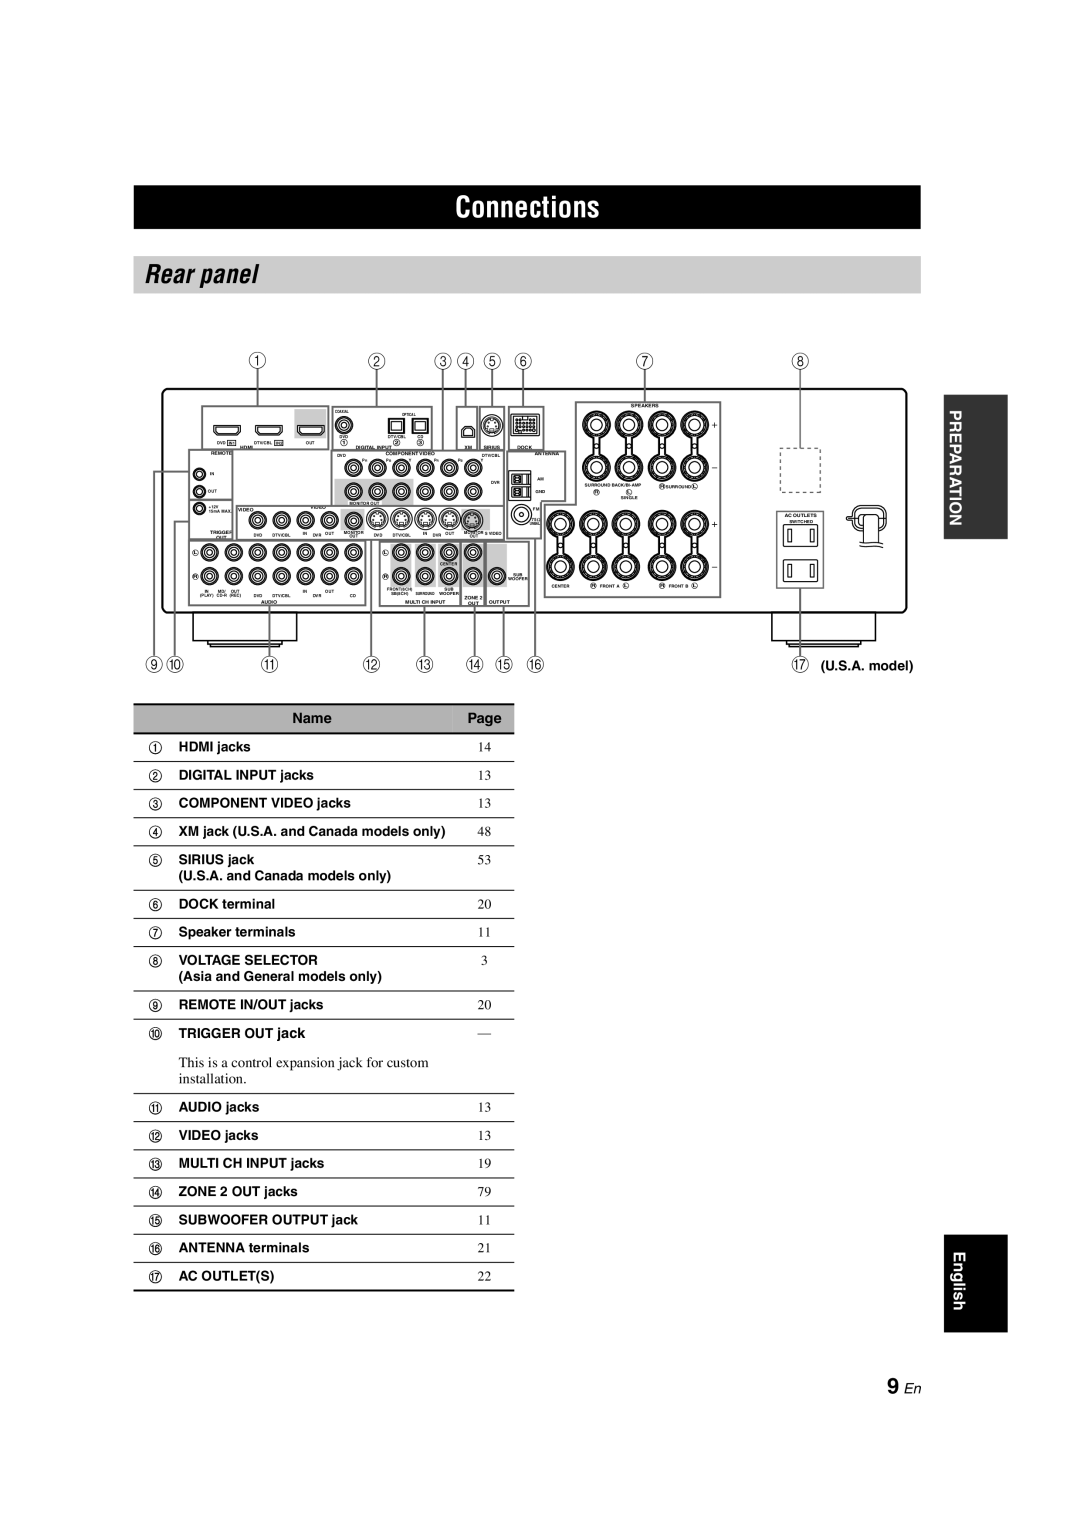 Yamaha HTR-6150 owner manual Connections, Rear panel, 9 En, 3 4 5, D E F 